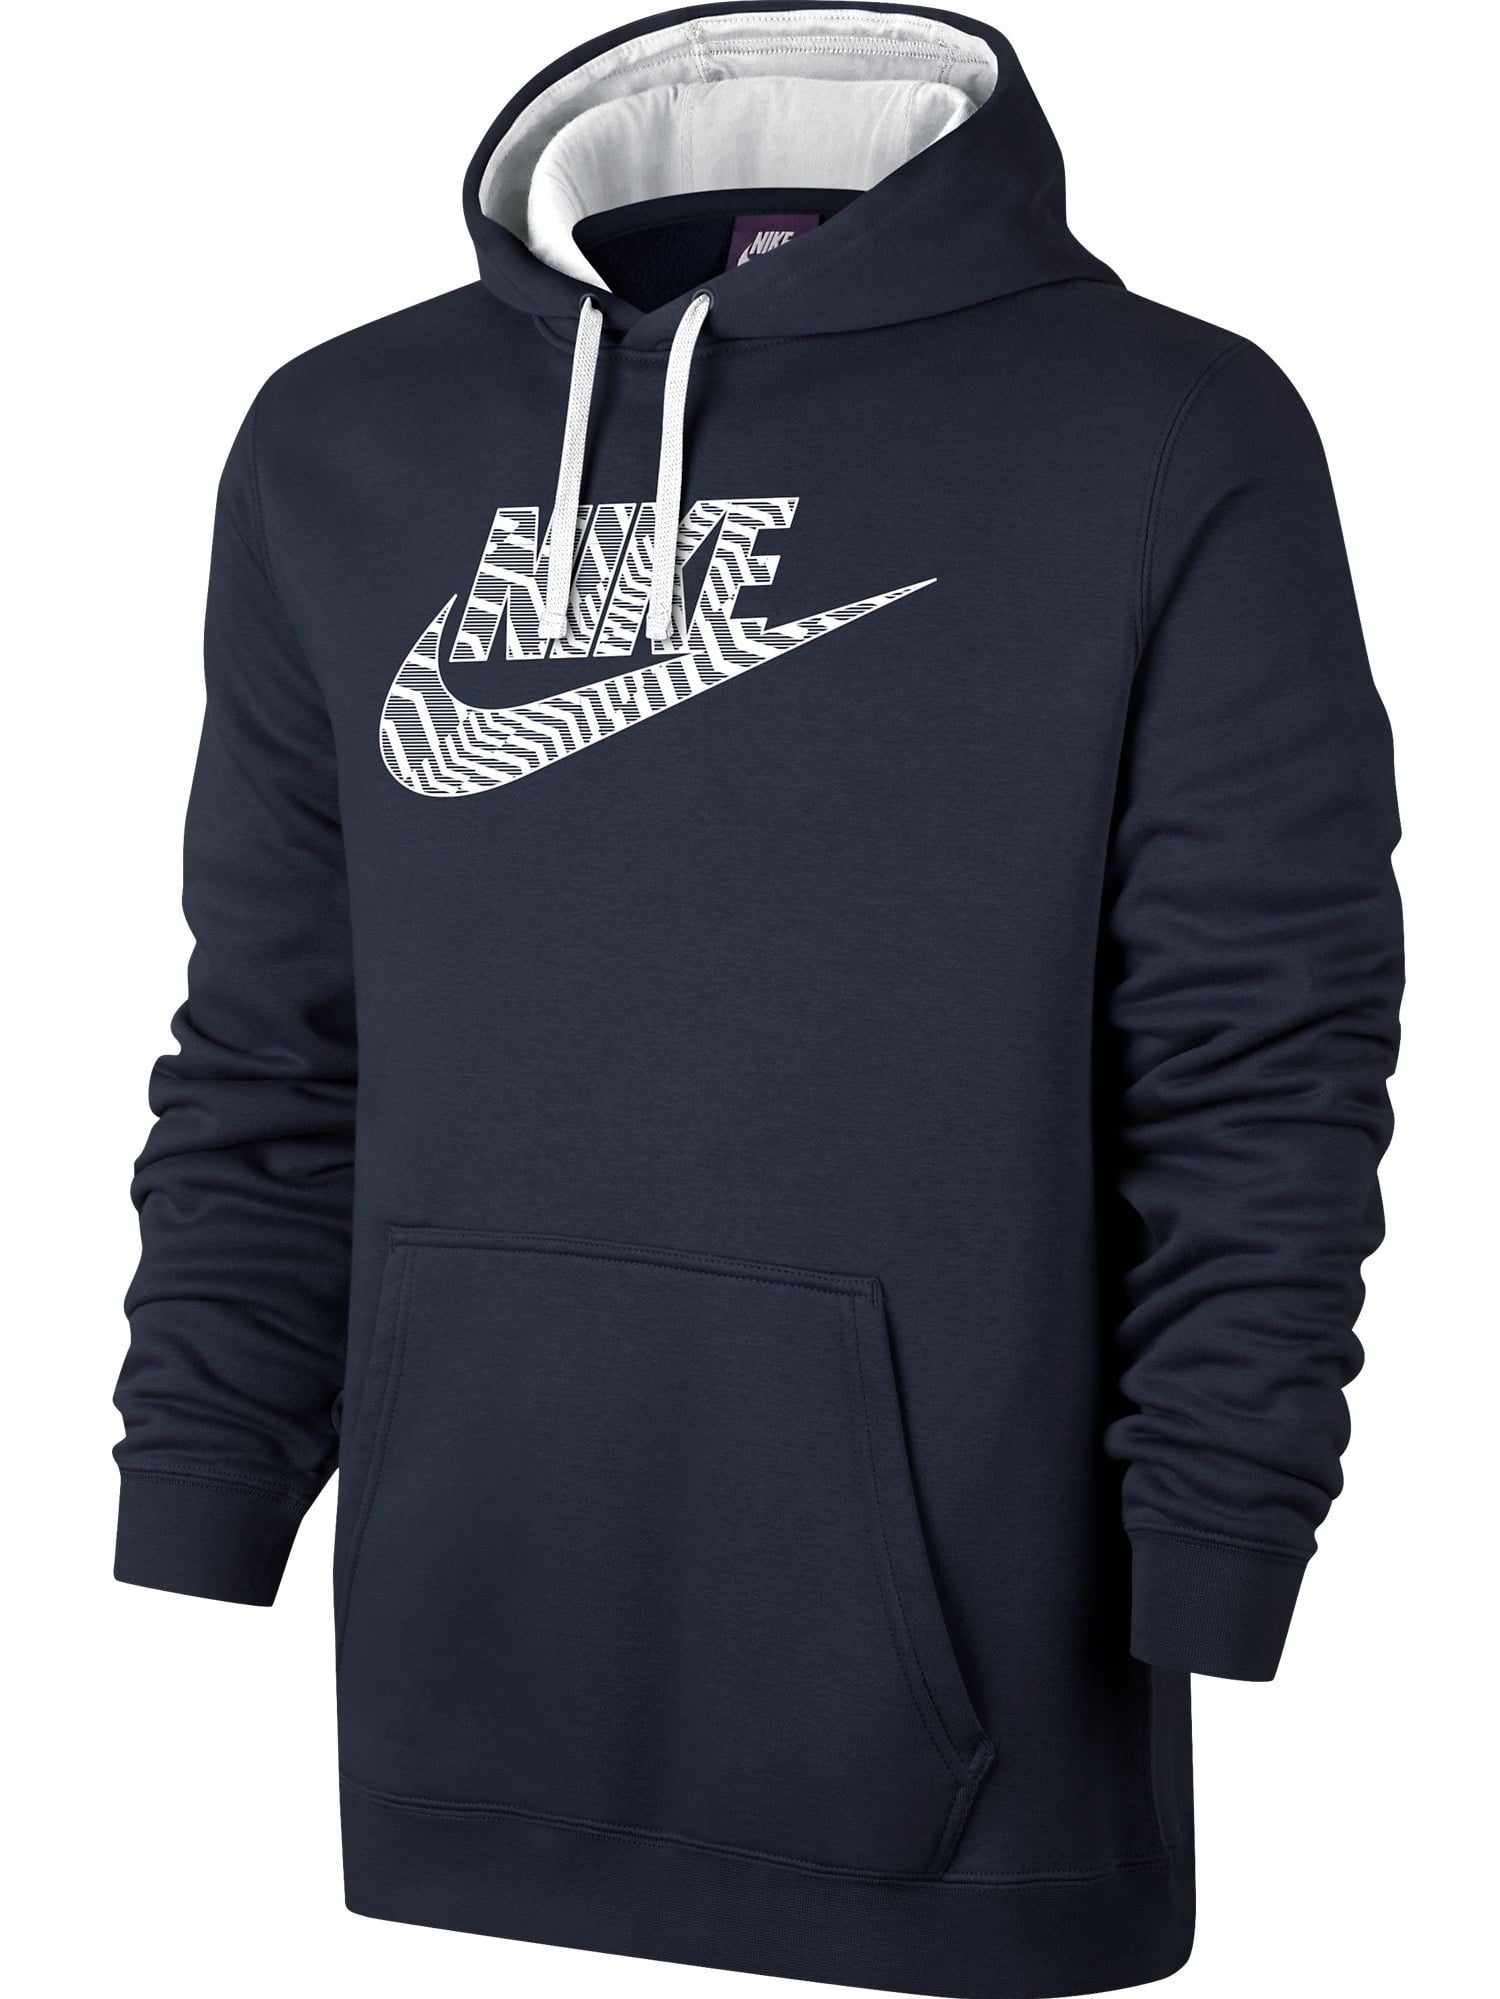 Nike Pullover Men's Hoodie Navy/White 861726-451 - Walmart.com